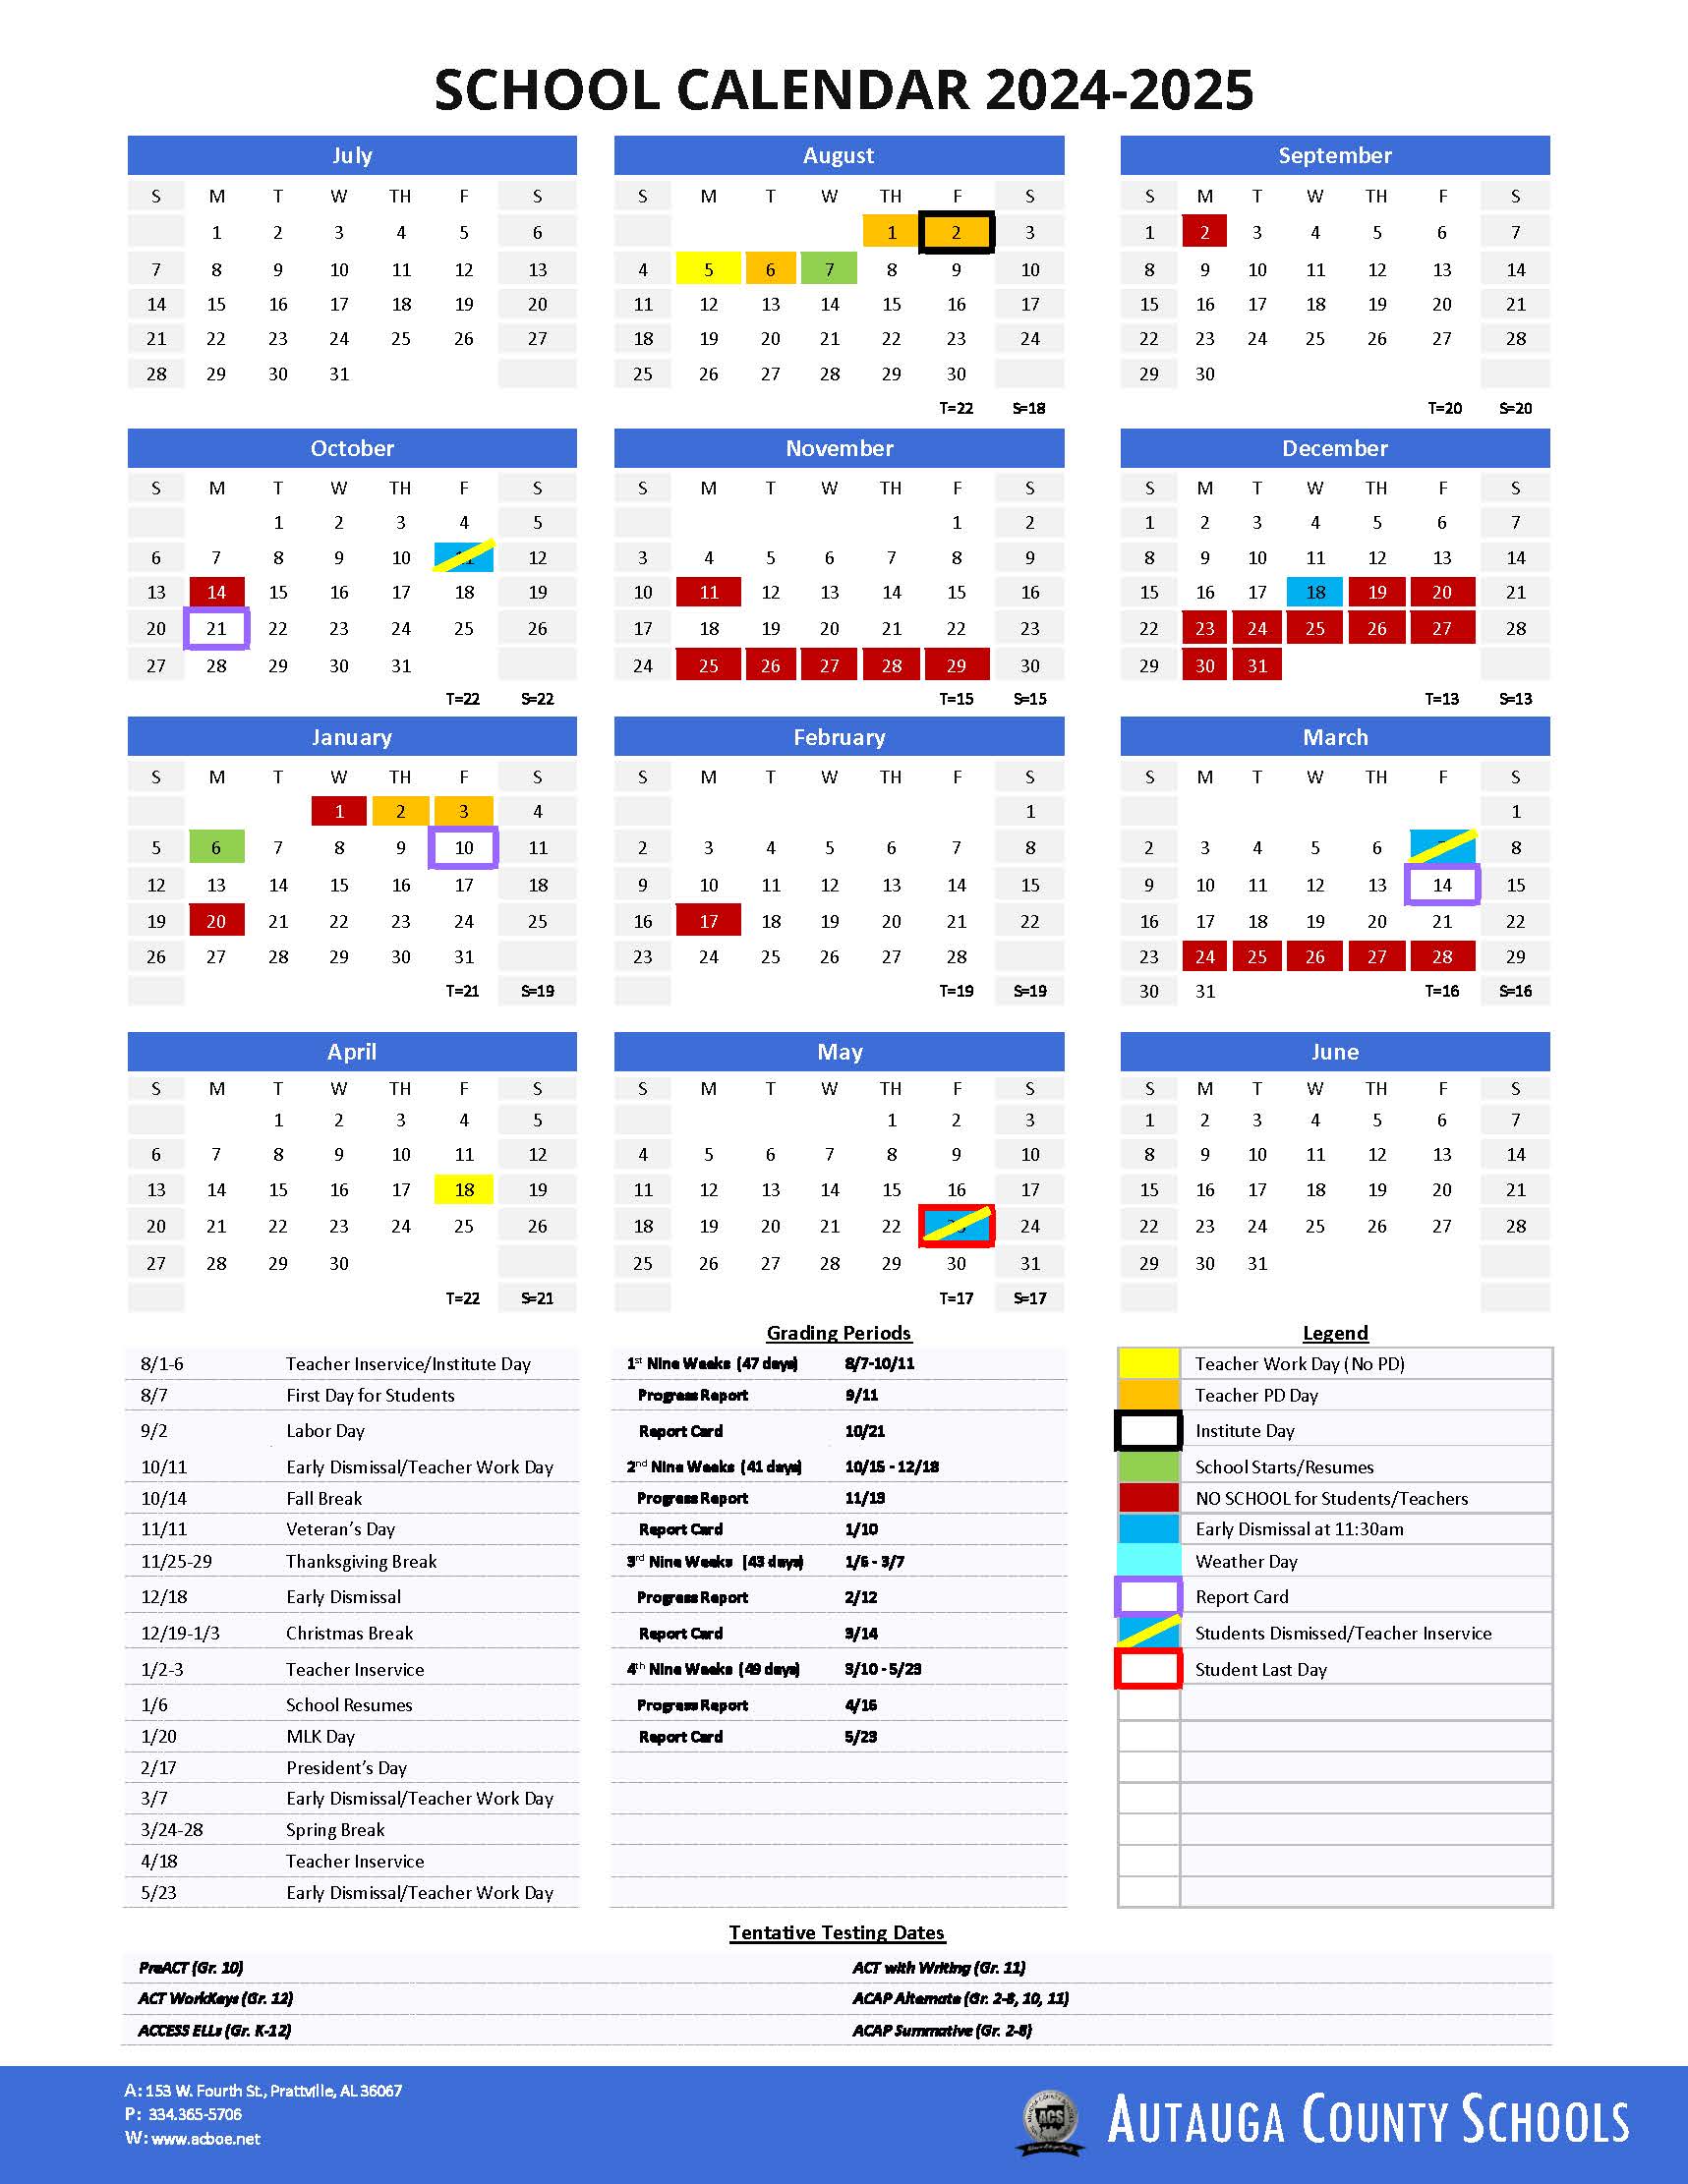 2024-2025 School Calendar as of 4/2324